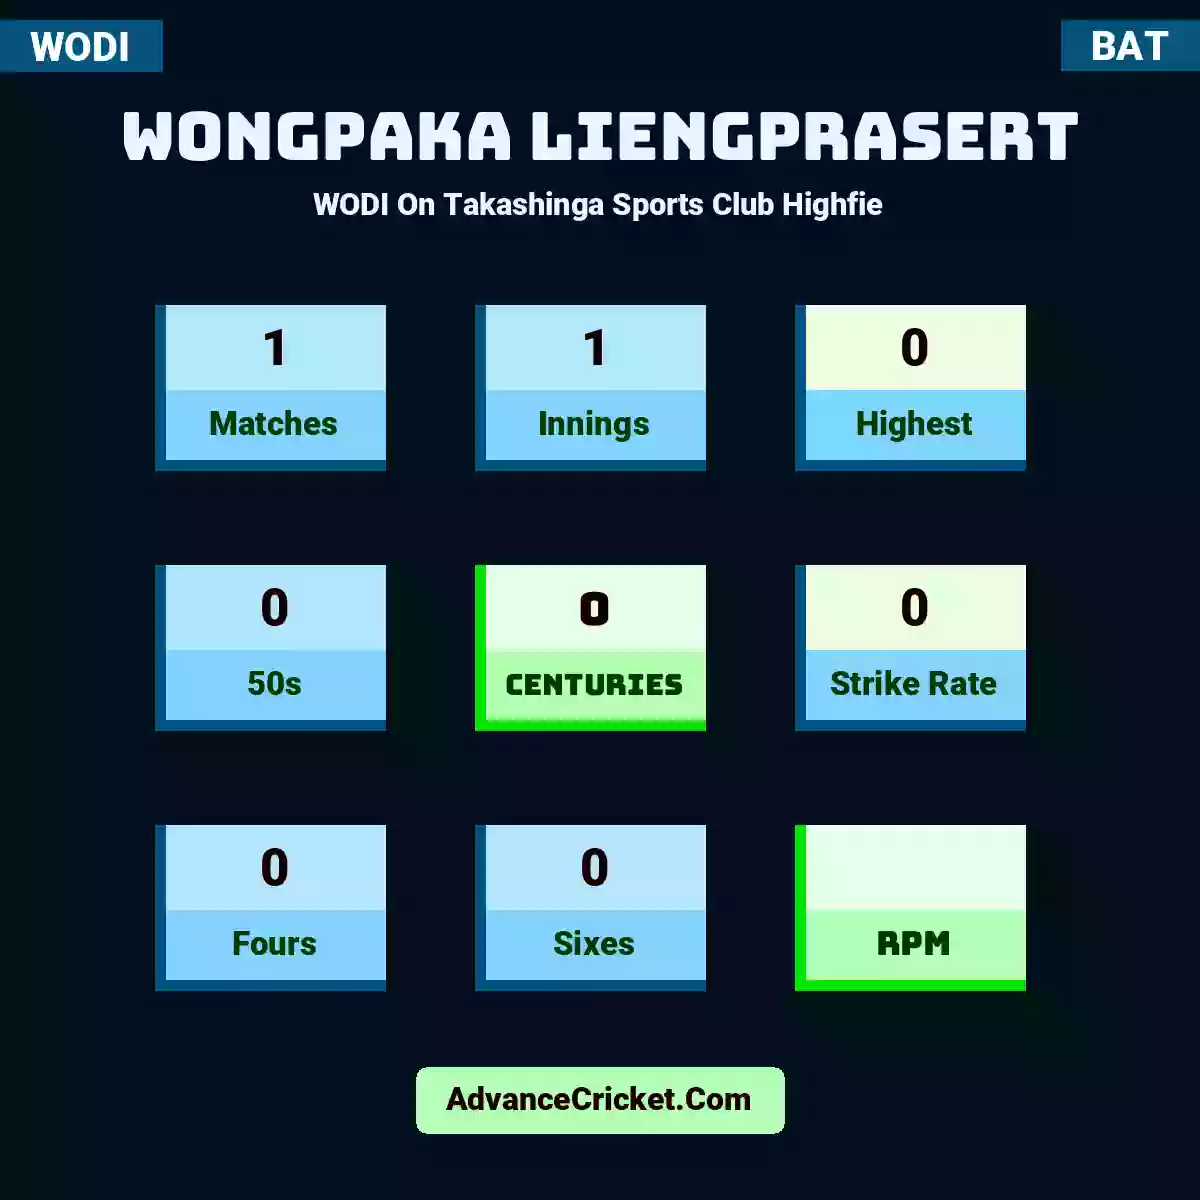 Wongpaka Liengprasert WODI  On Takashinga Sports Club Highfie, Wongpaka Liengprasert played 1 matches, scored 0 runs as highest, 0 half-centuries, and 0 centuries, with a strike rate of 0. W.Liengprasert hit 0 fours and 0 sixes.